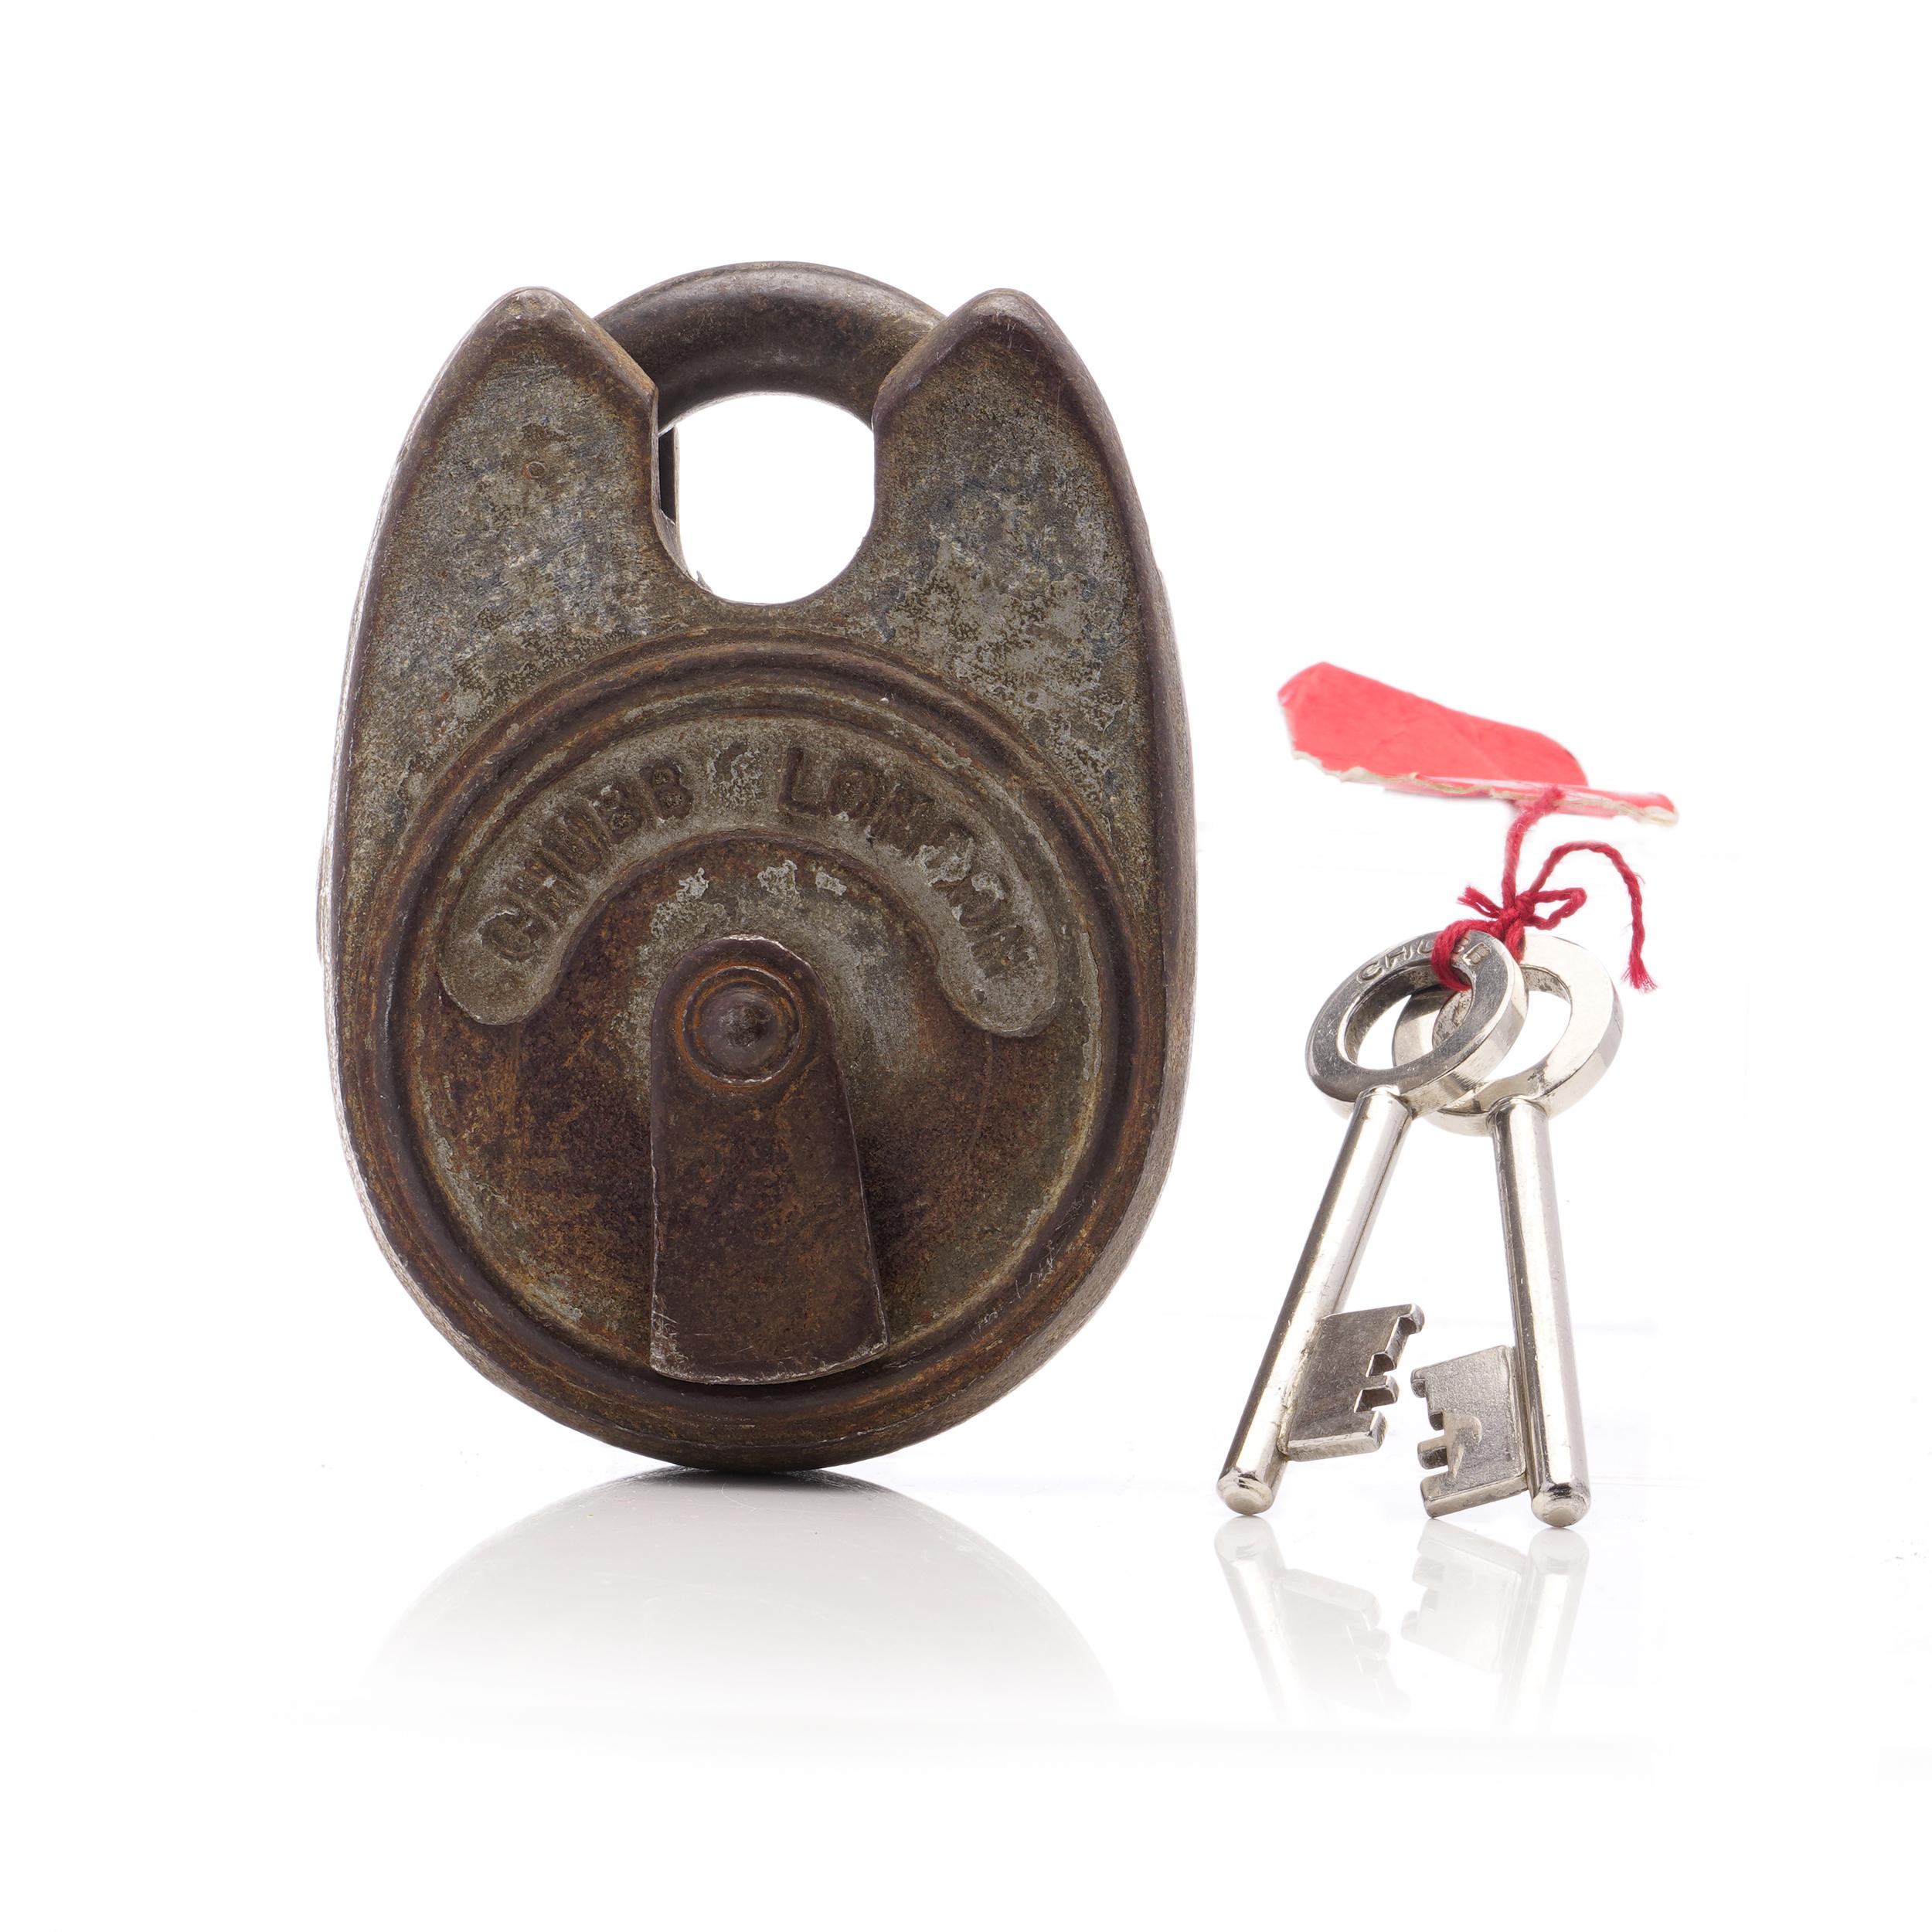 This vintage Chubb padlock, with the prestigious 